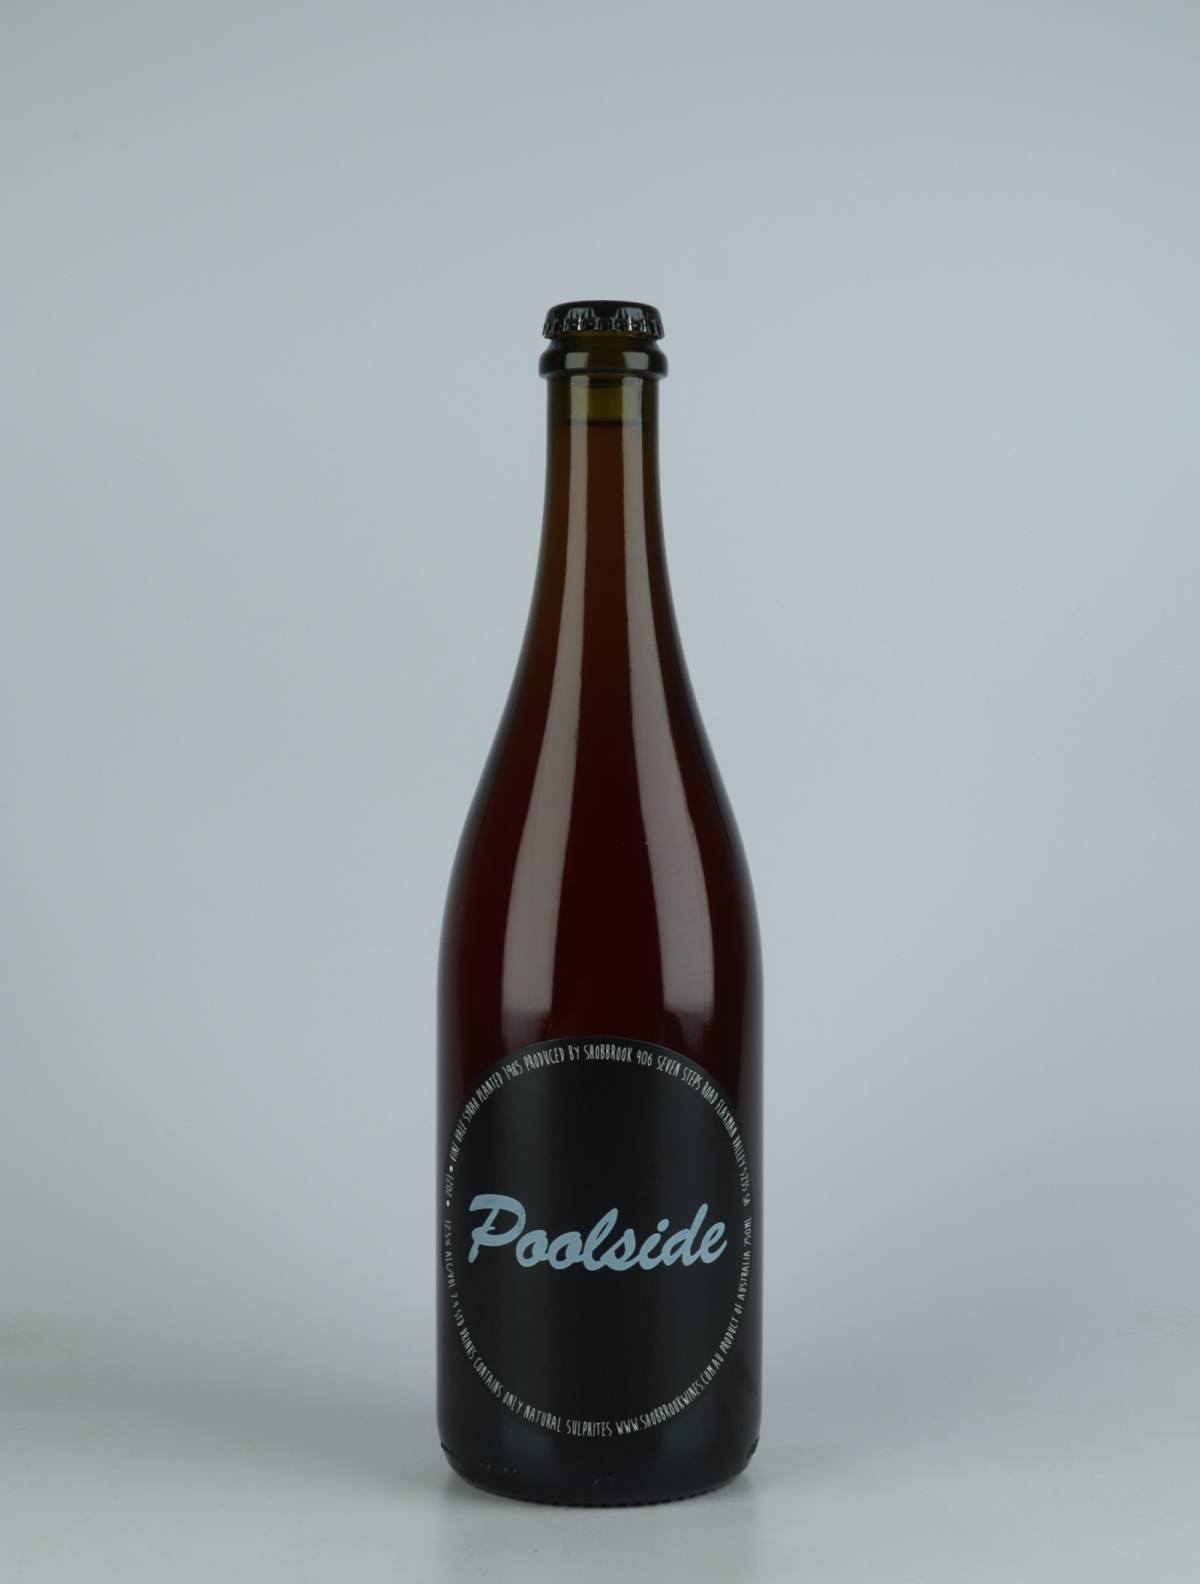 A bottle 2021 Poolside Rosé from Tom Shobbrook, Barossa Valley in Australia